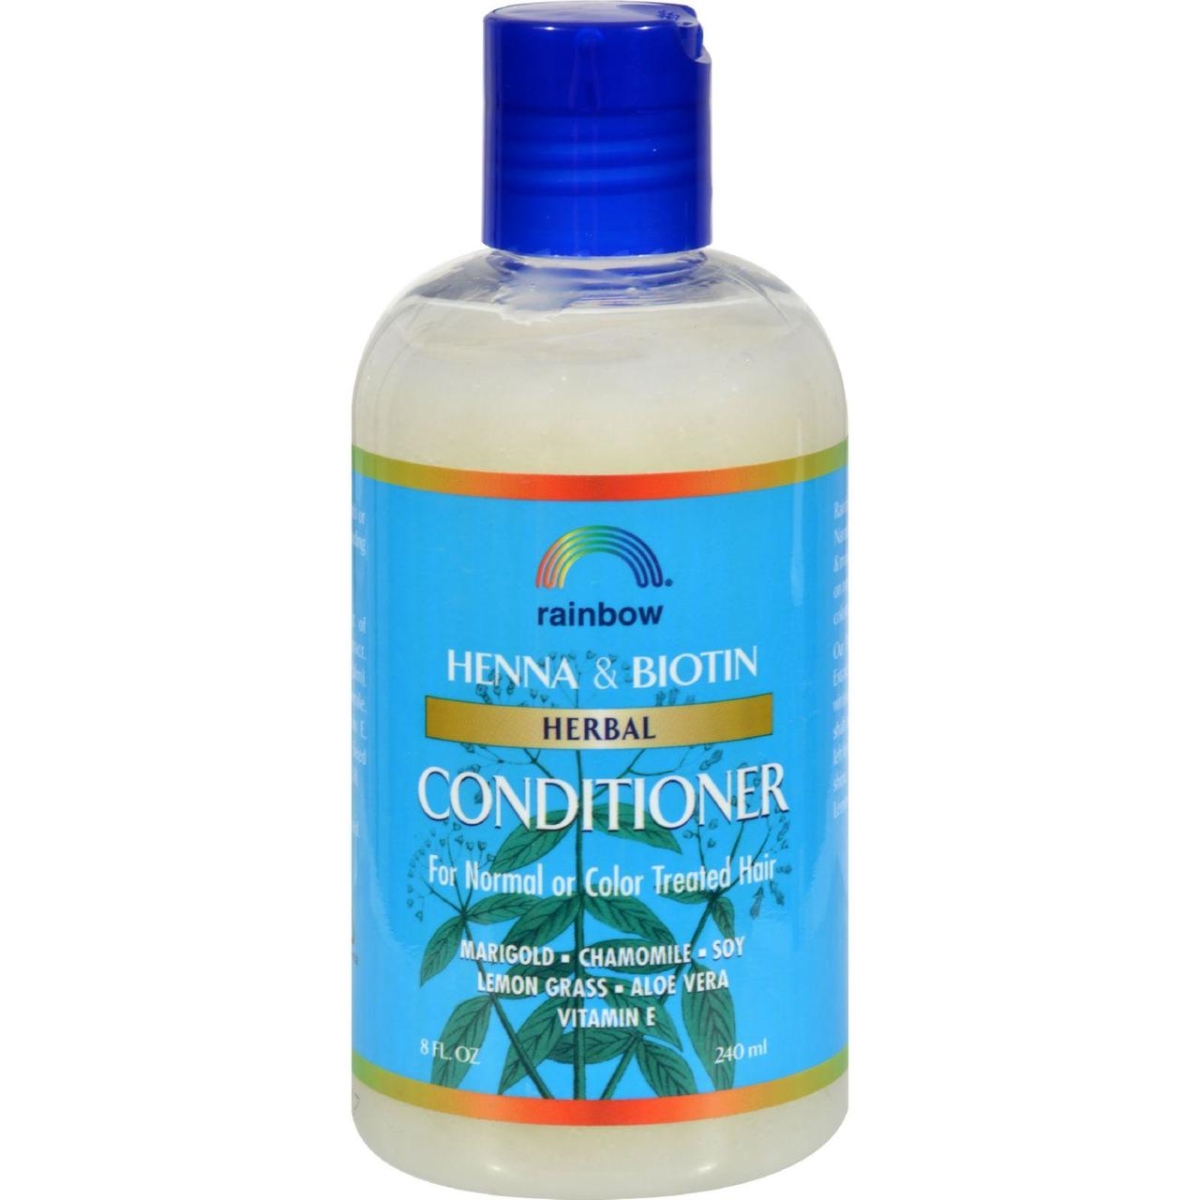 Hg0115543 8 Fl Oz Herbal Conditioner Henna & Biotin